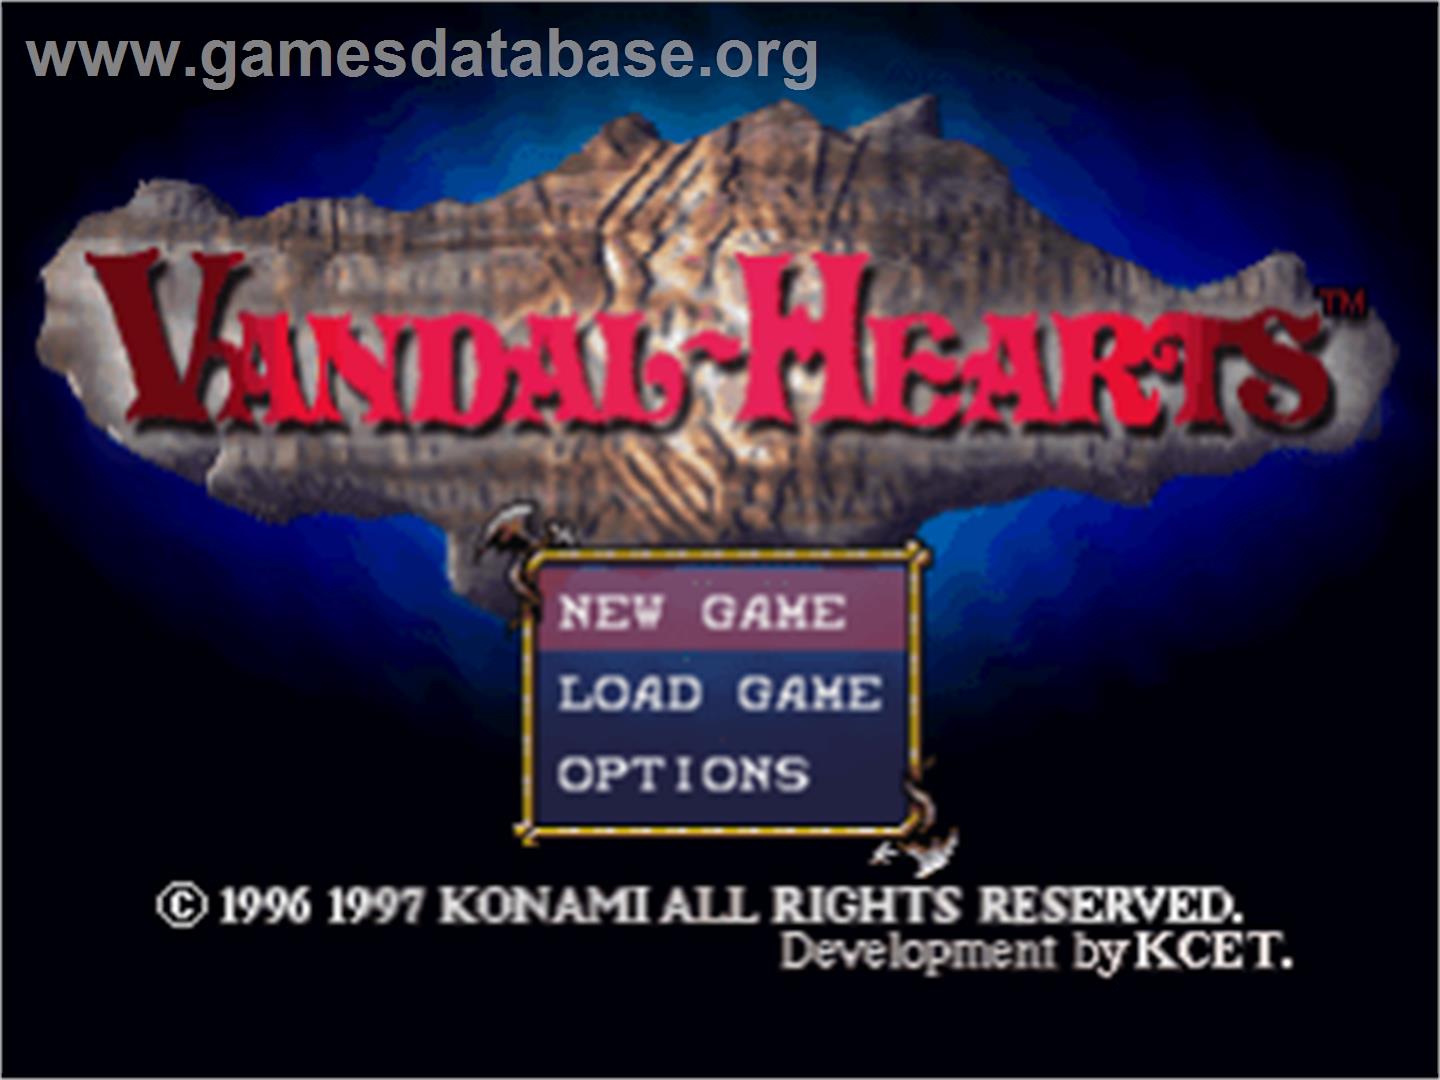 Vandal Hearts - Sony Playstation - Artwork - Title Screen